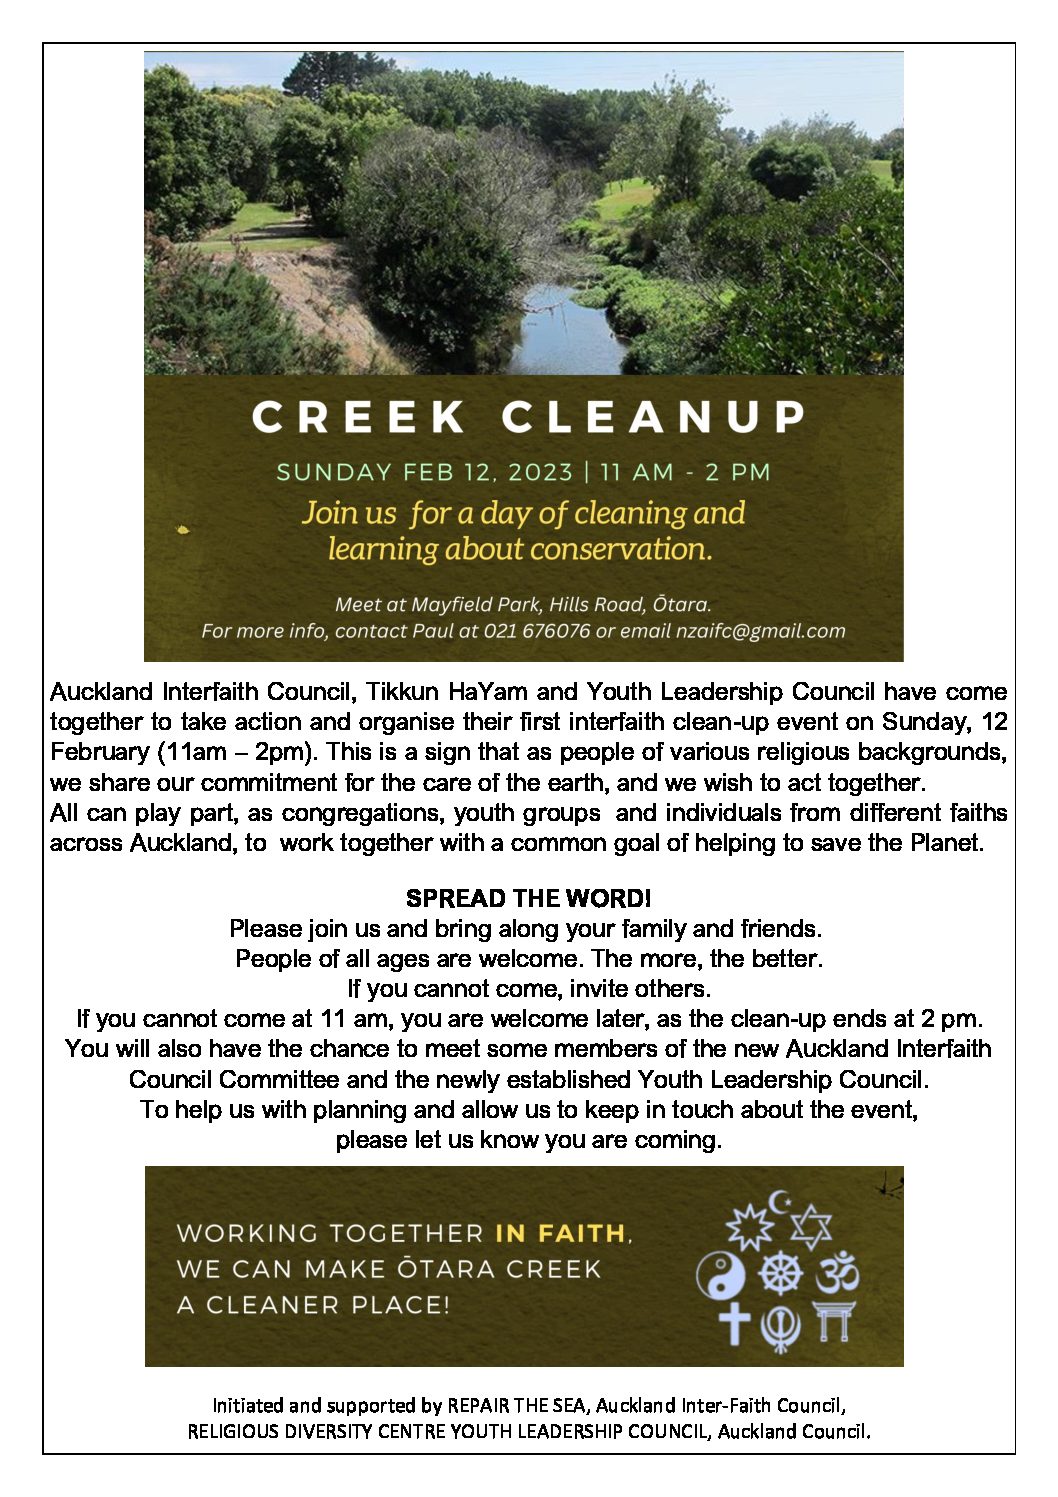 Otara Creek Clean-up